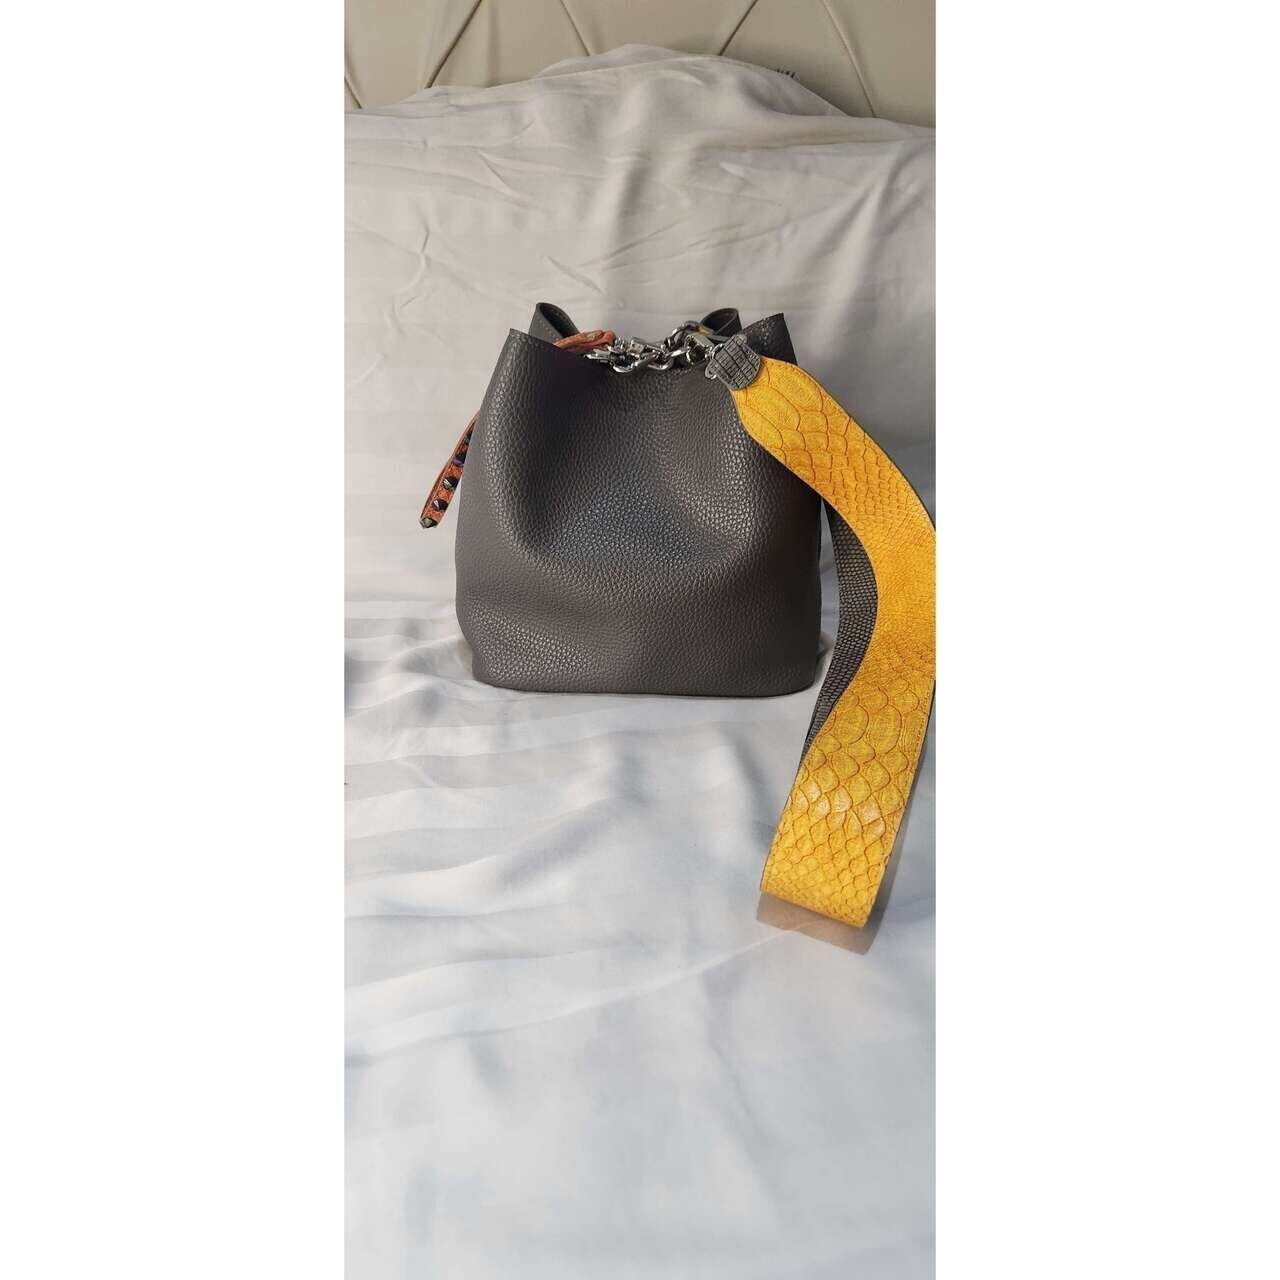 Find Kapoor Grey & Stud Orange Handbag